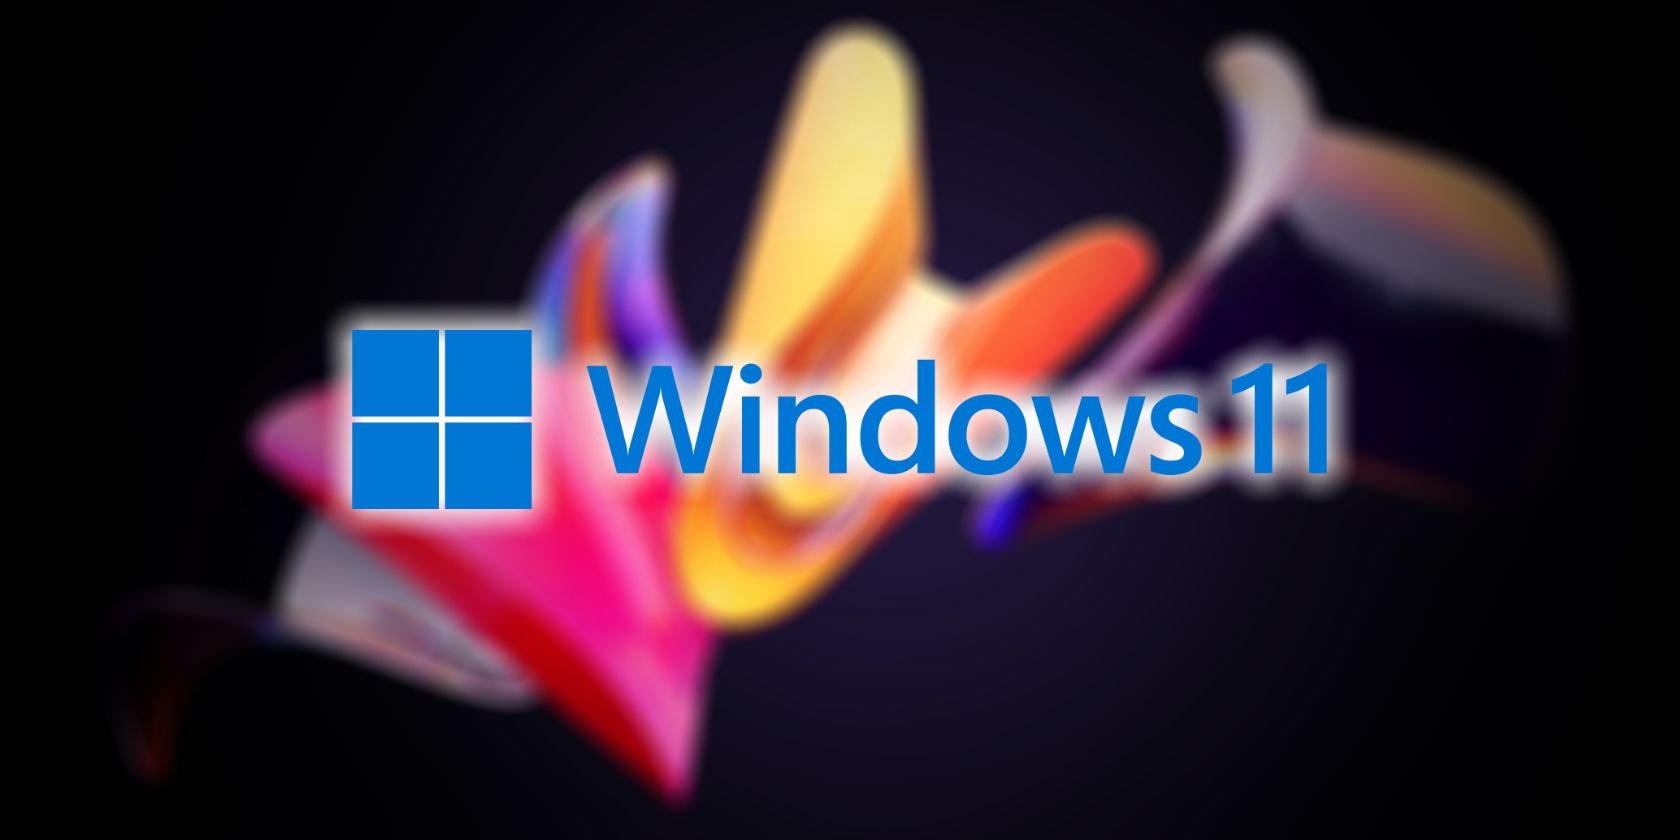 windows 11 logo background feature